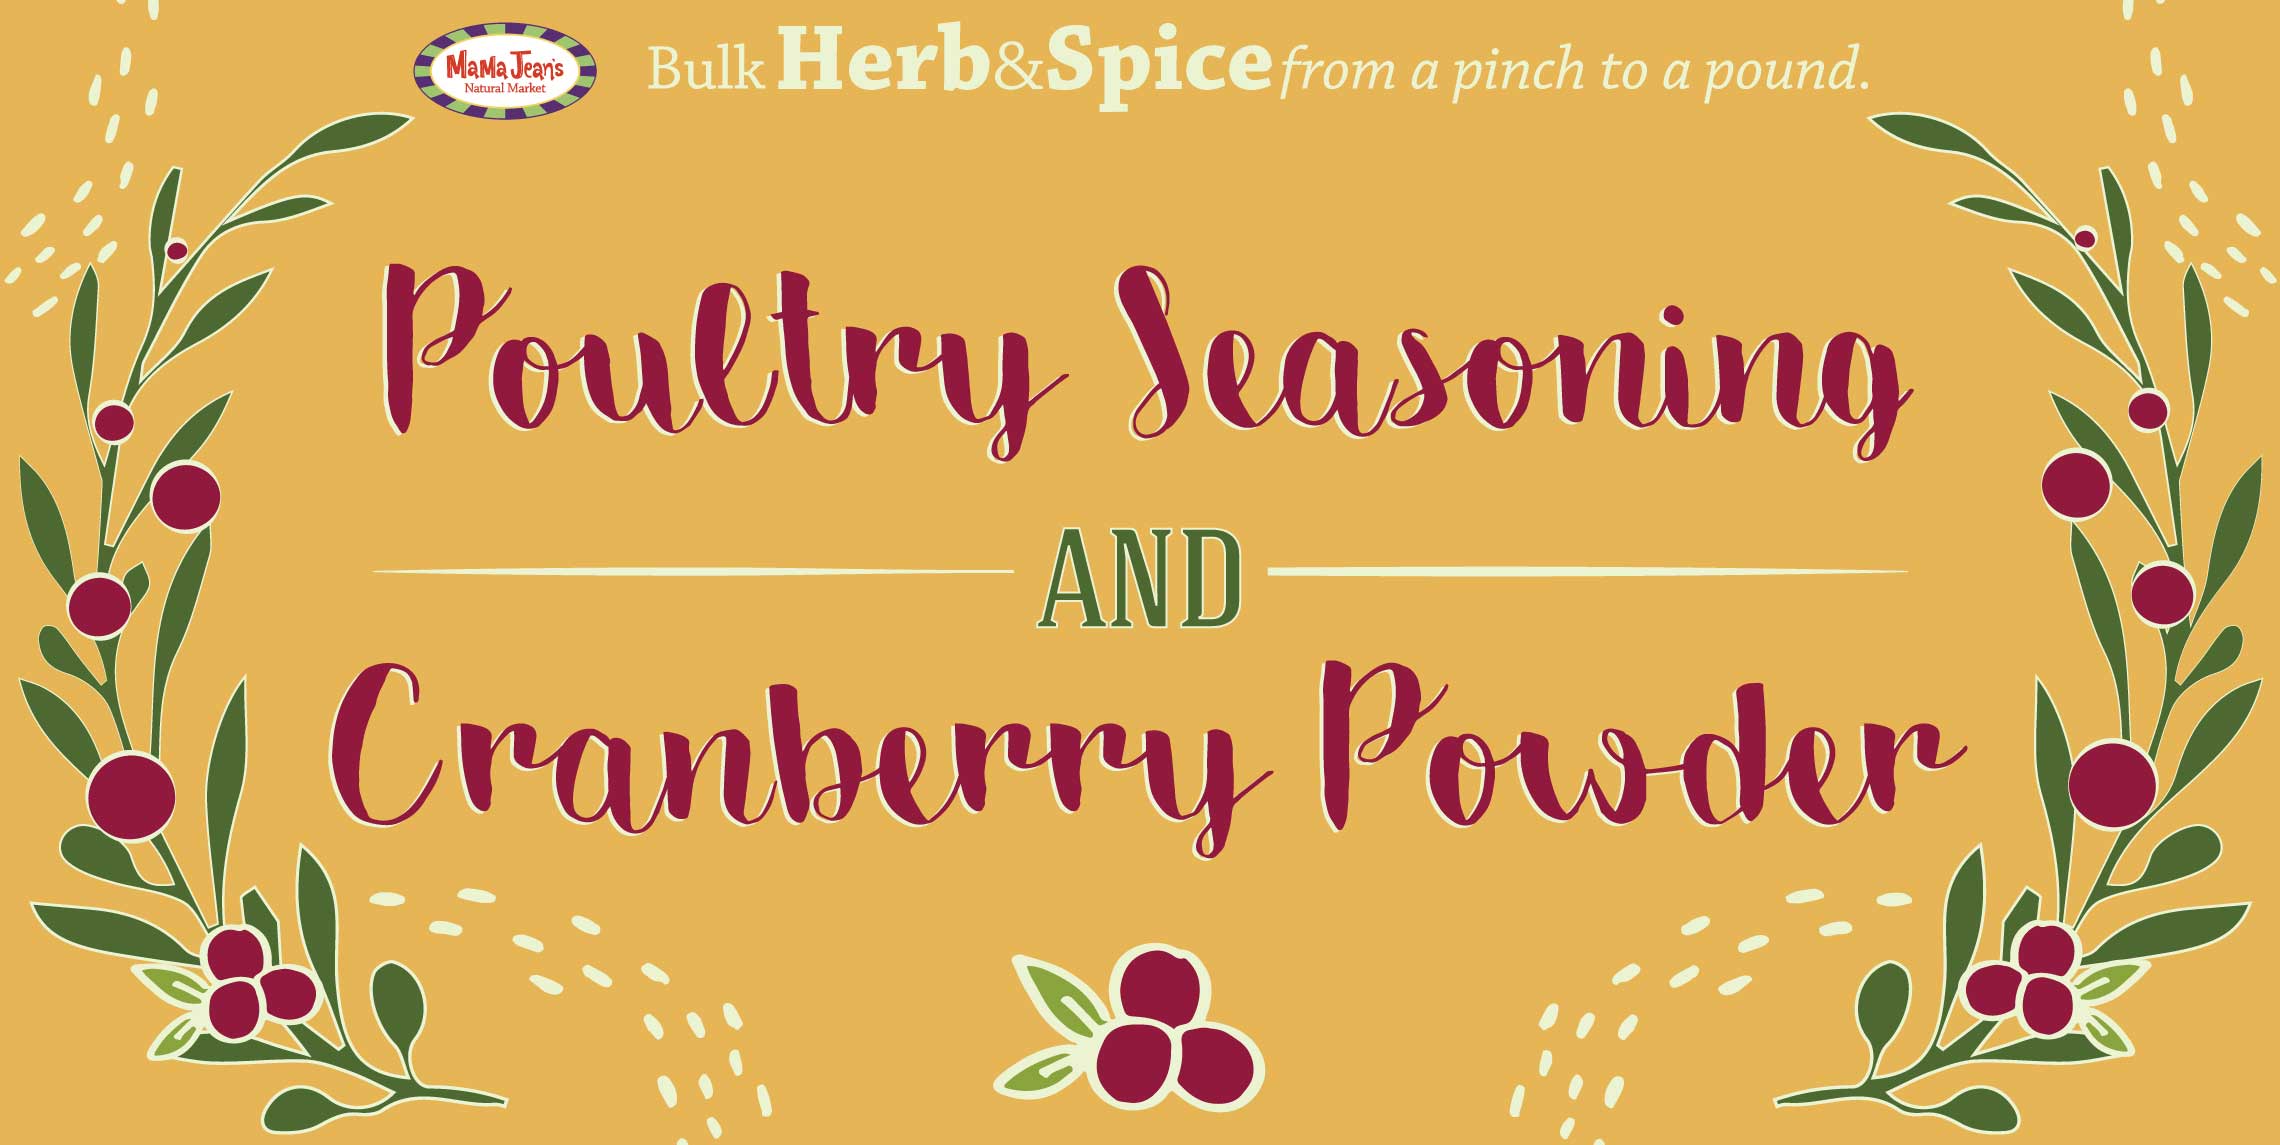 Bulk Herb & Spice Poultry Seasoning Cranberry